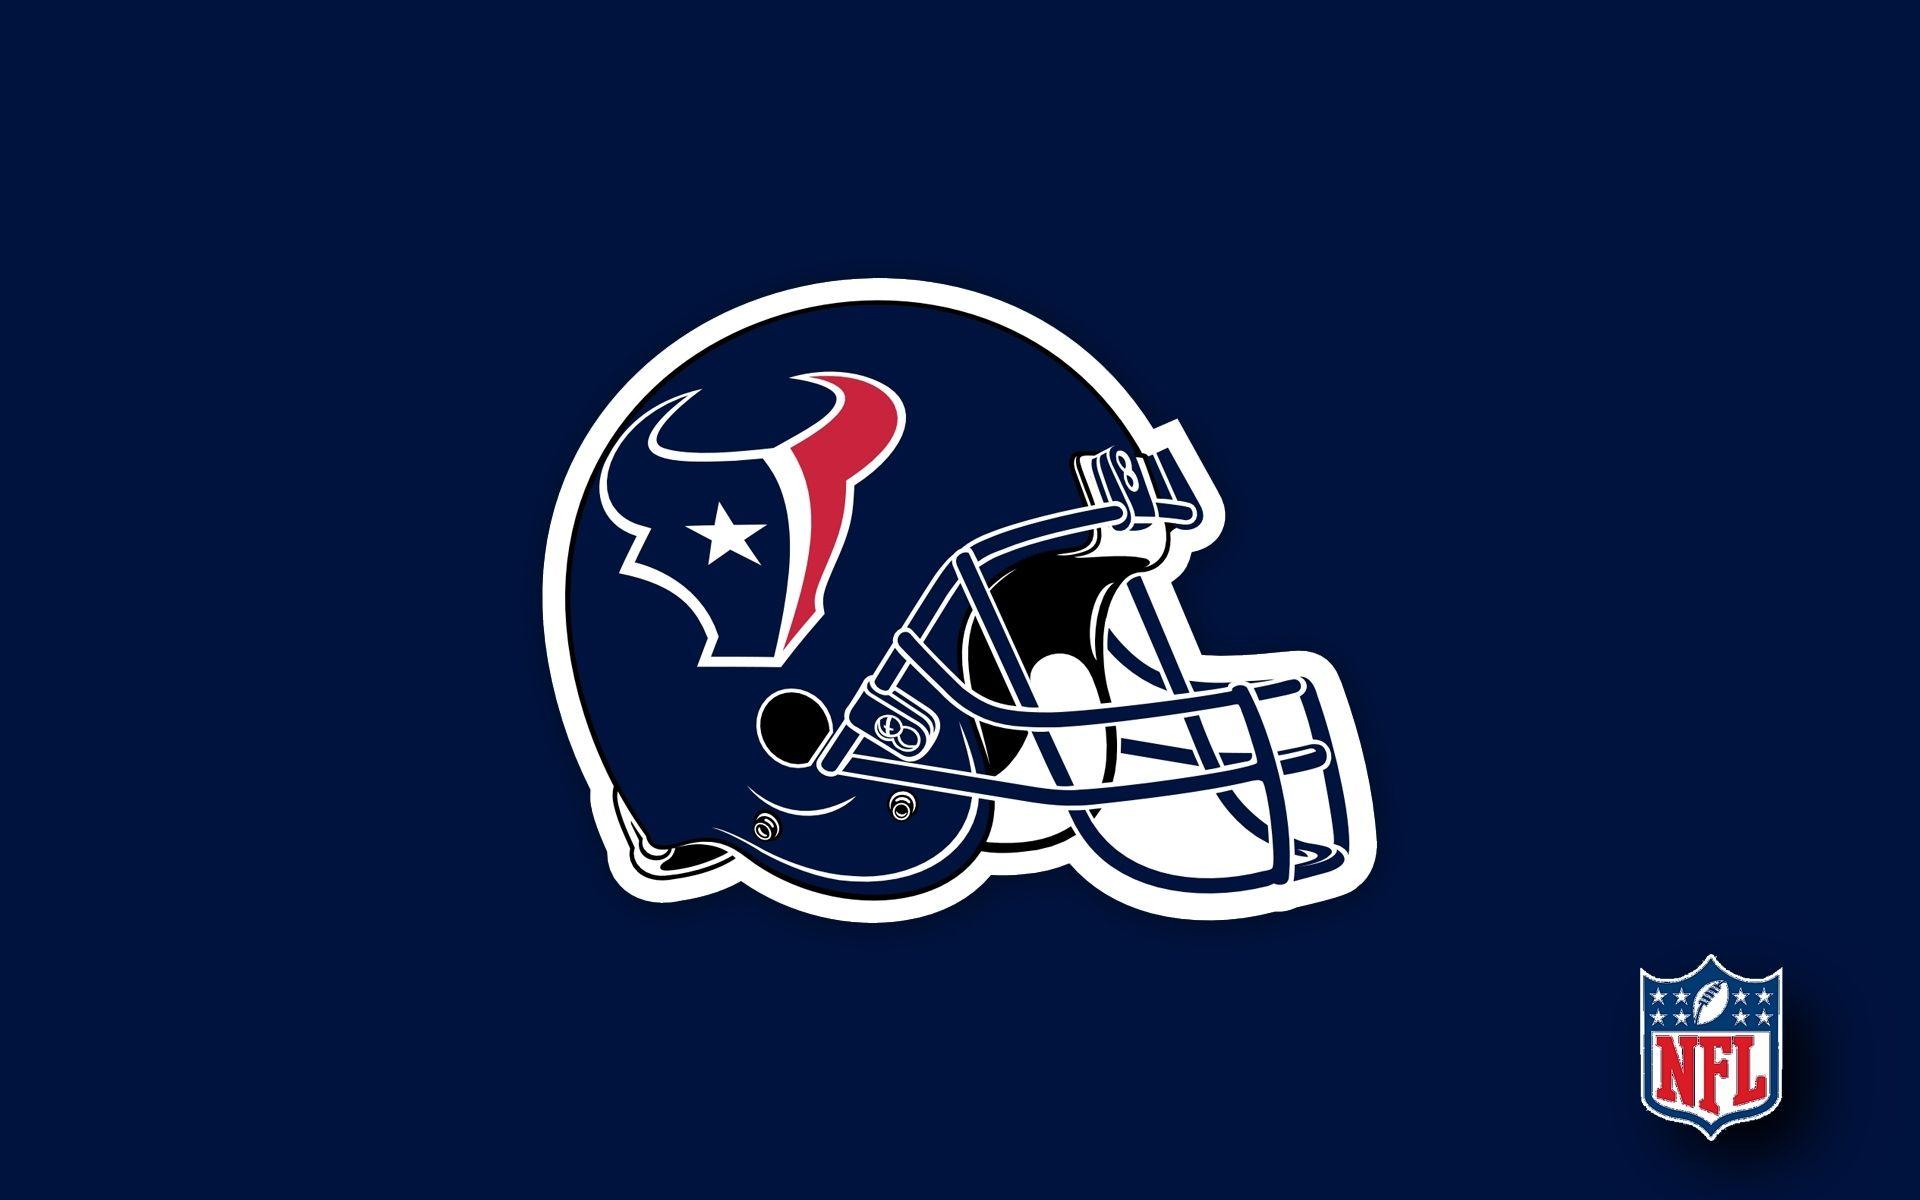 Houston Texans Helmet Wallpaper. All Best Image Collection